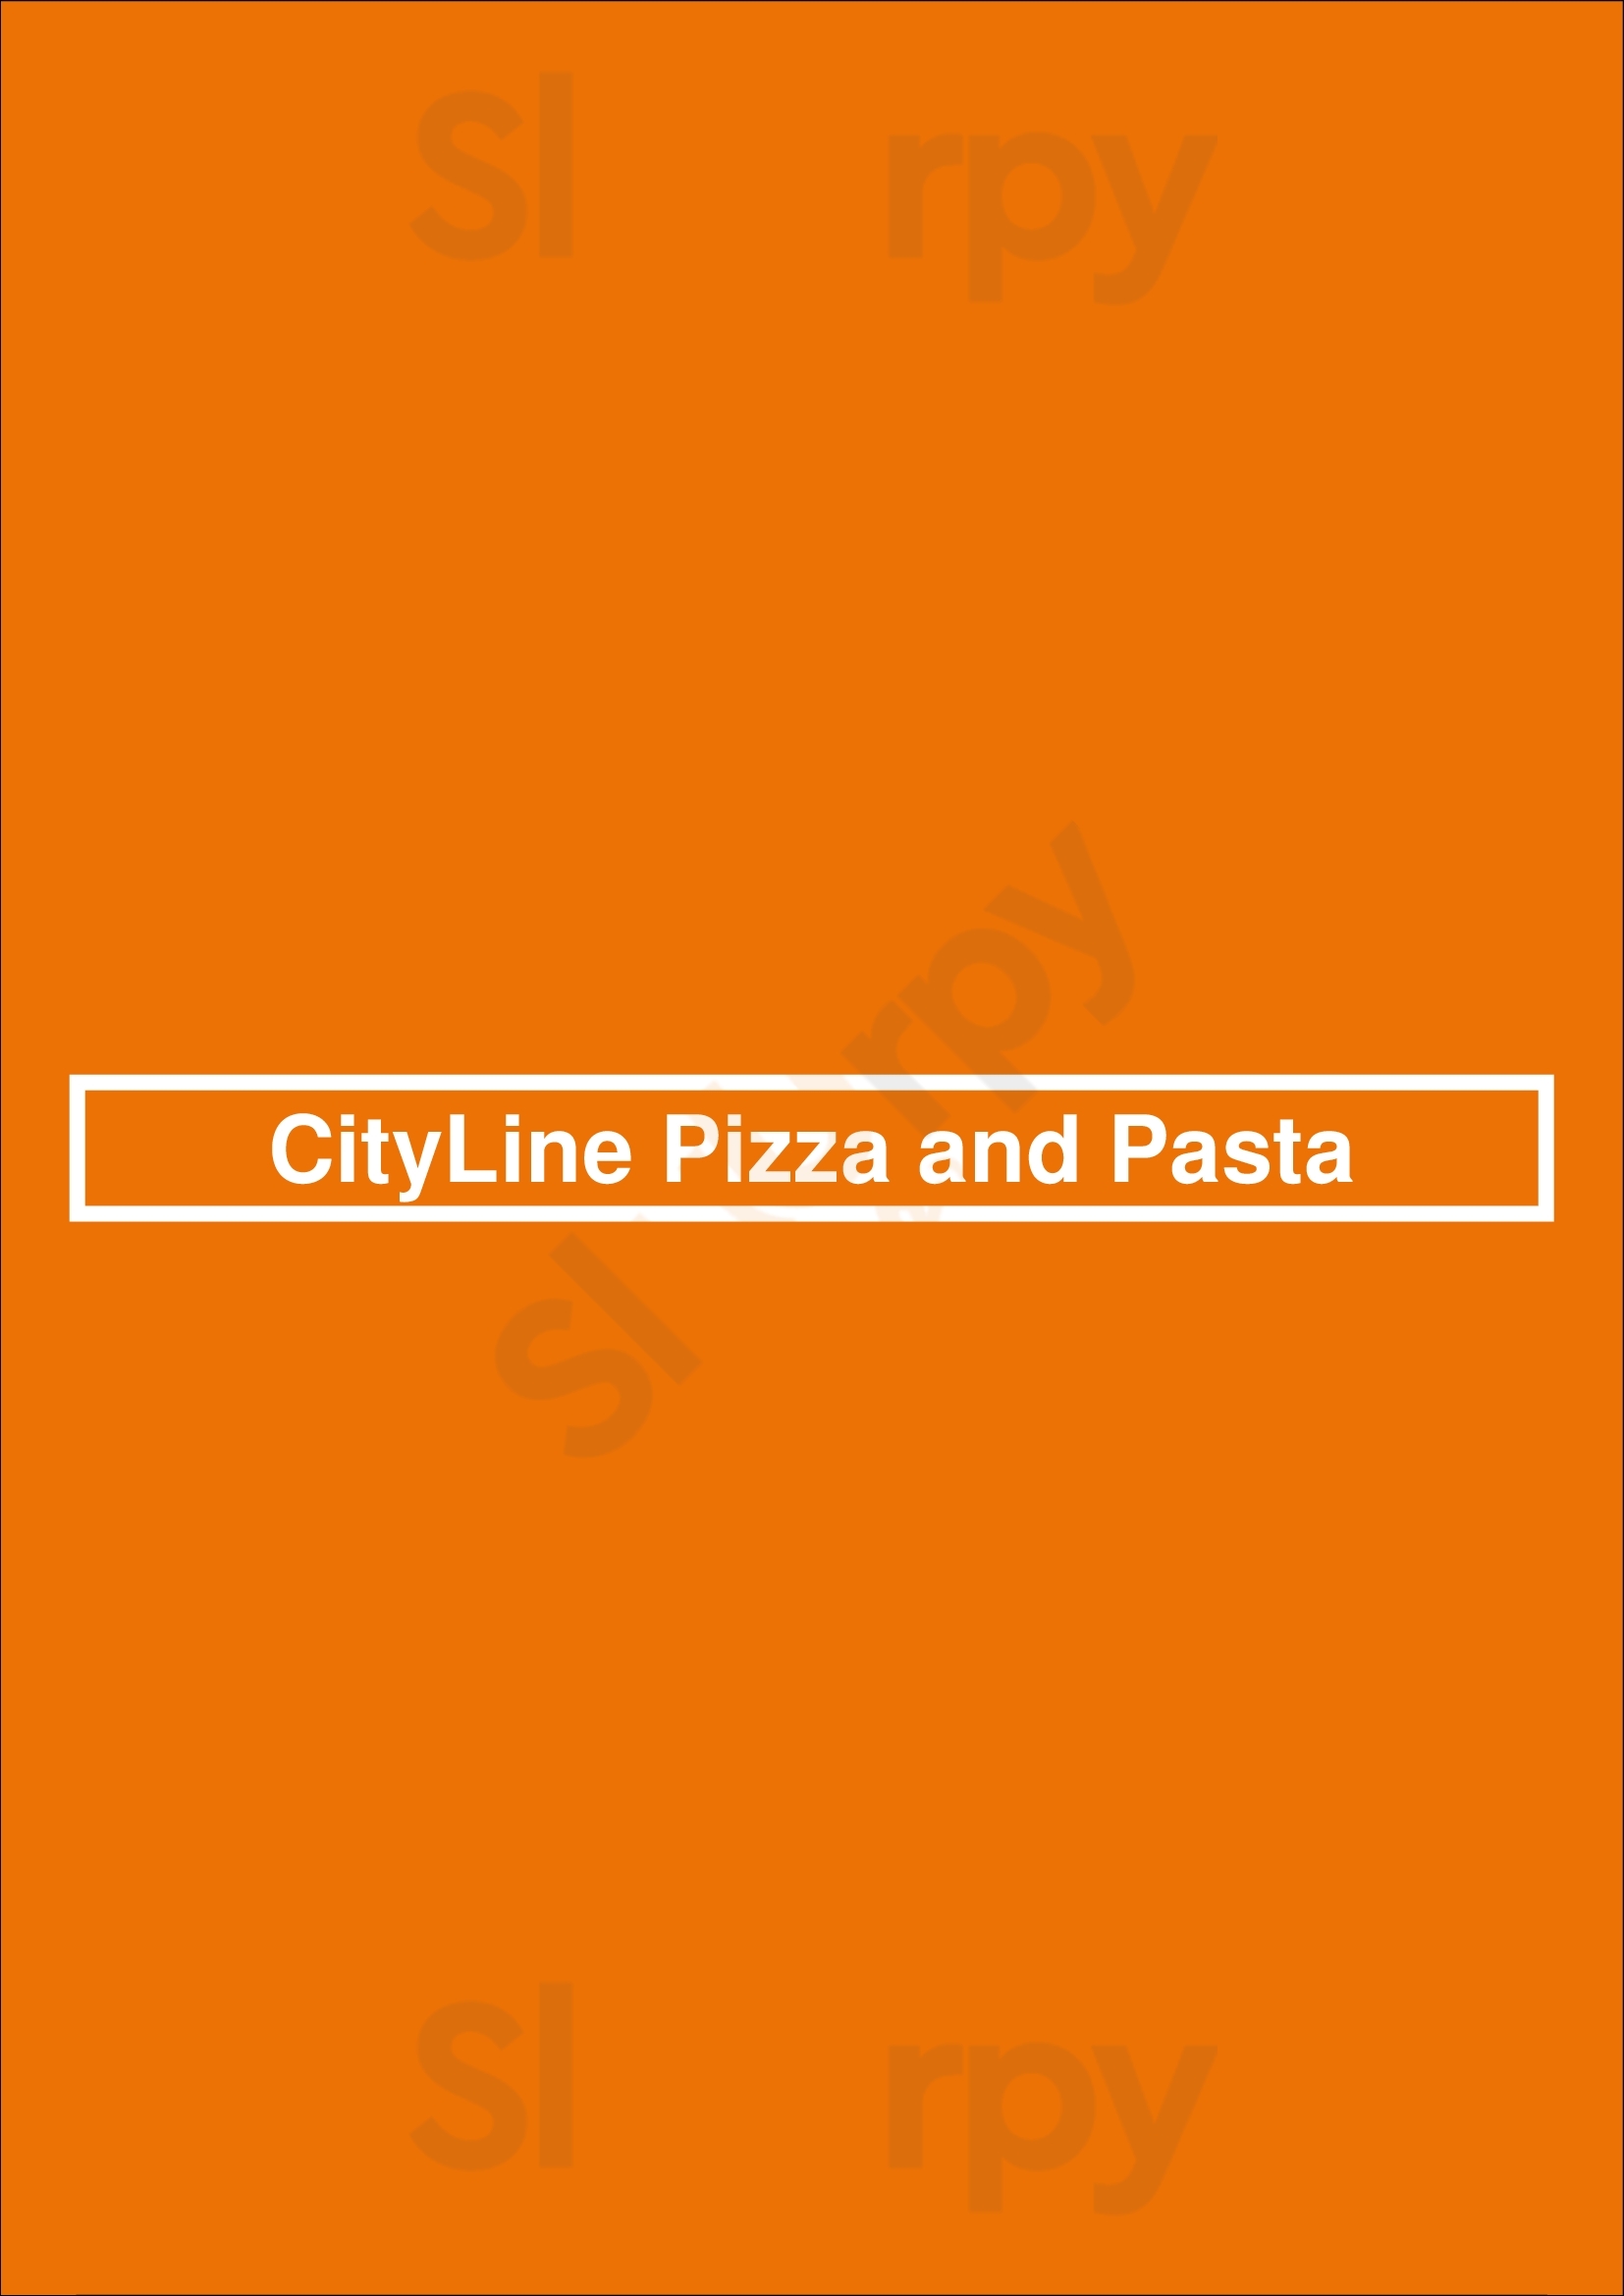 Cityline Pizza And Pasta Brooklyn Menu - 1